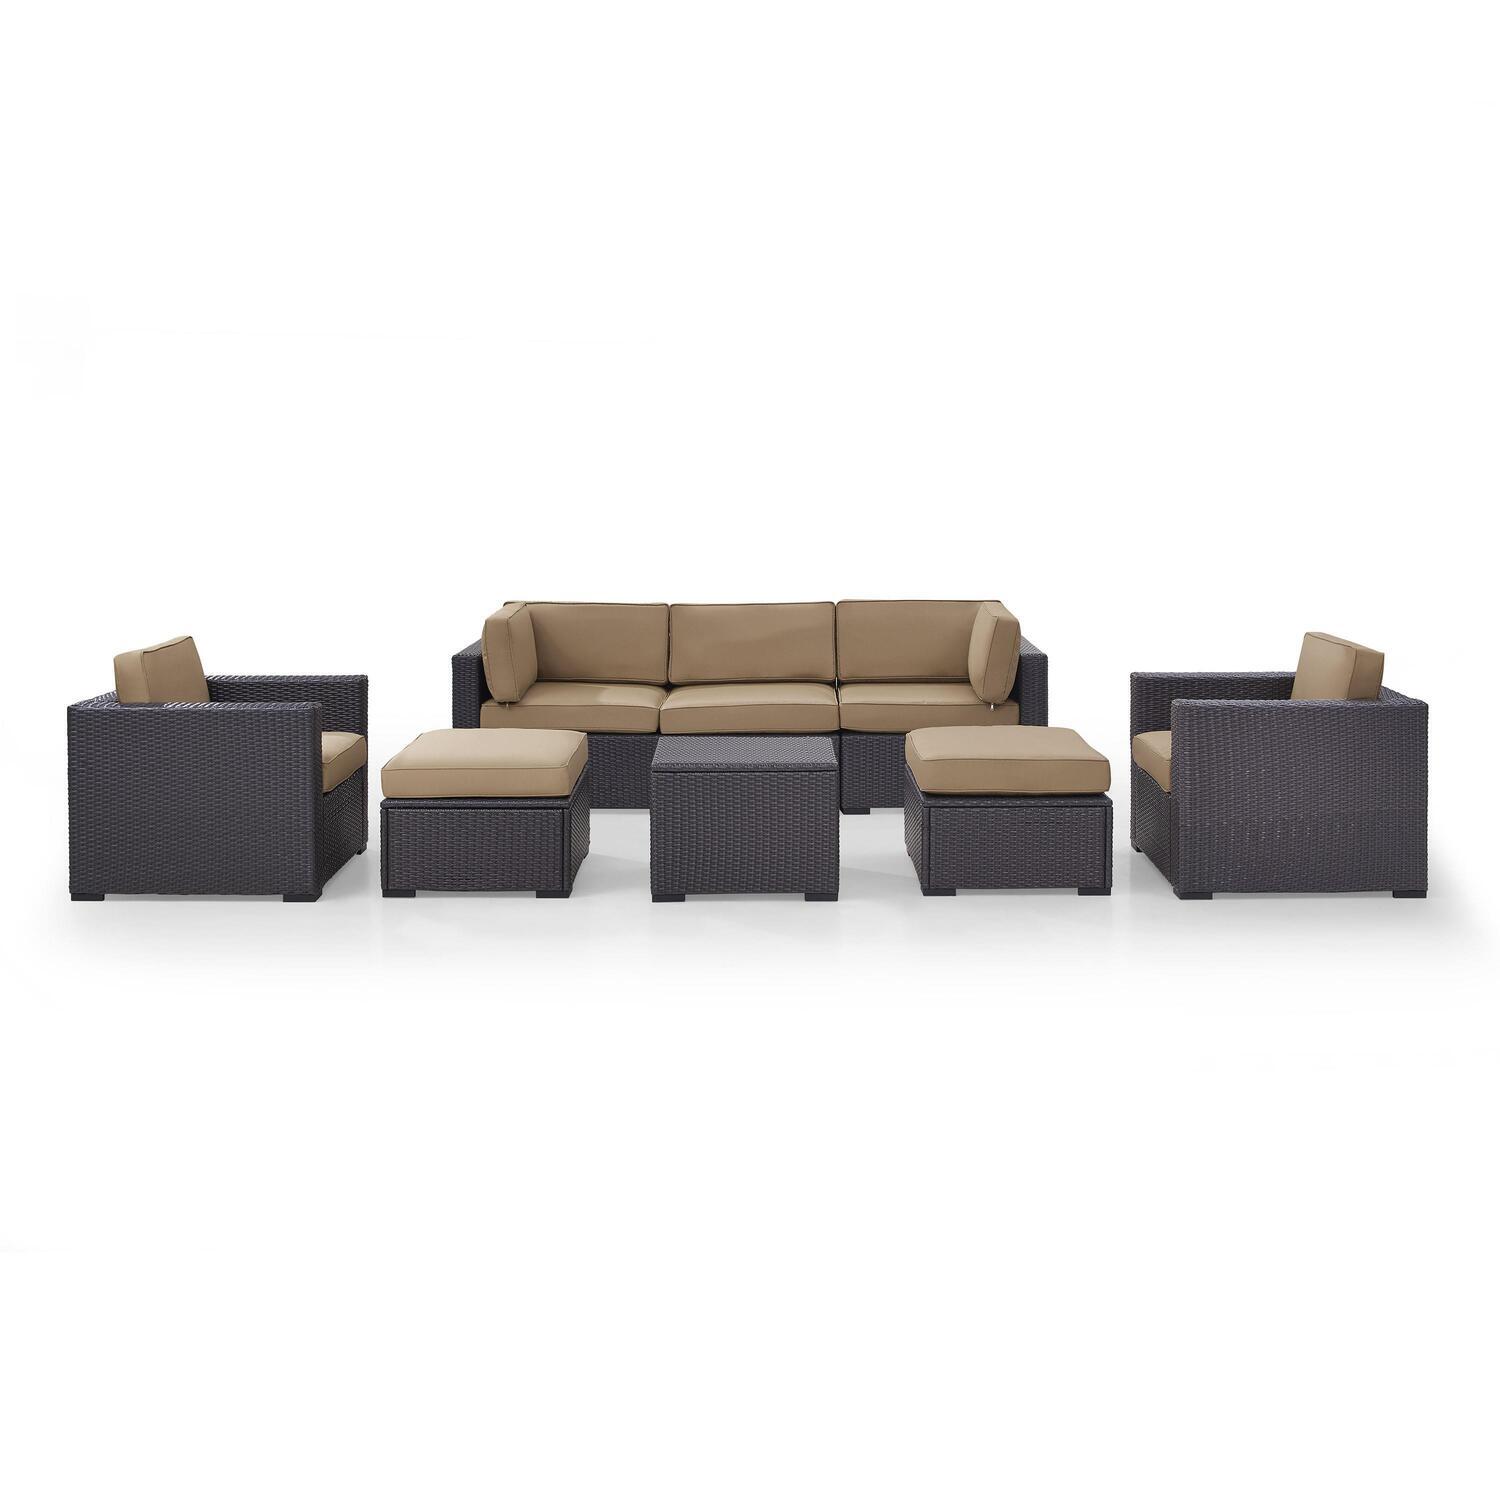 Crosley Furniture Biscayne 7 Piece Metal Patio Sofa Set in Brown/Mocha - image 1 of 4